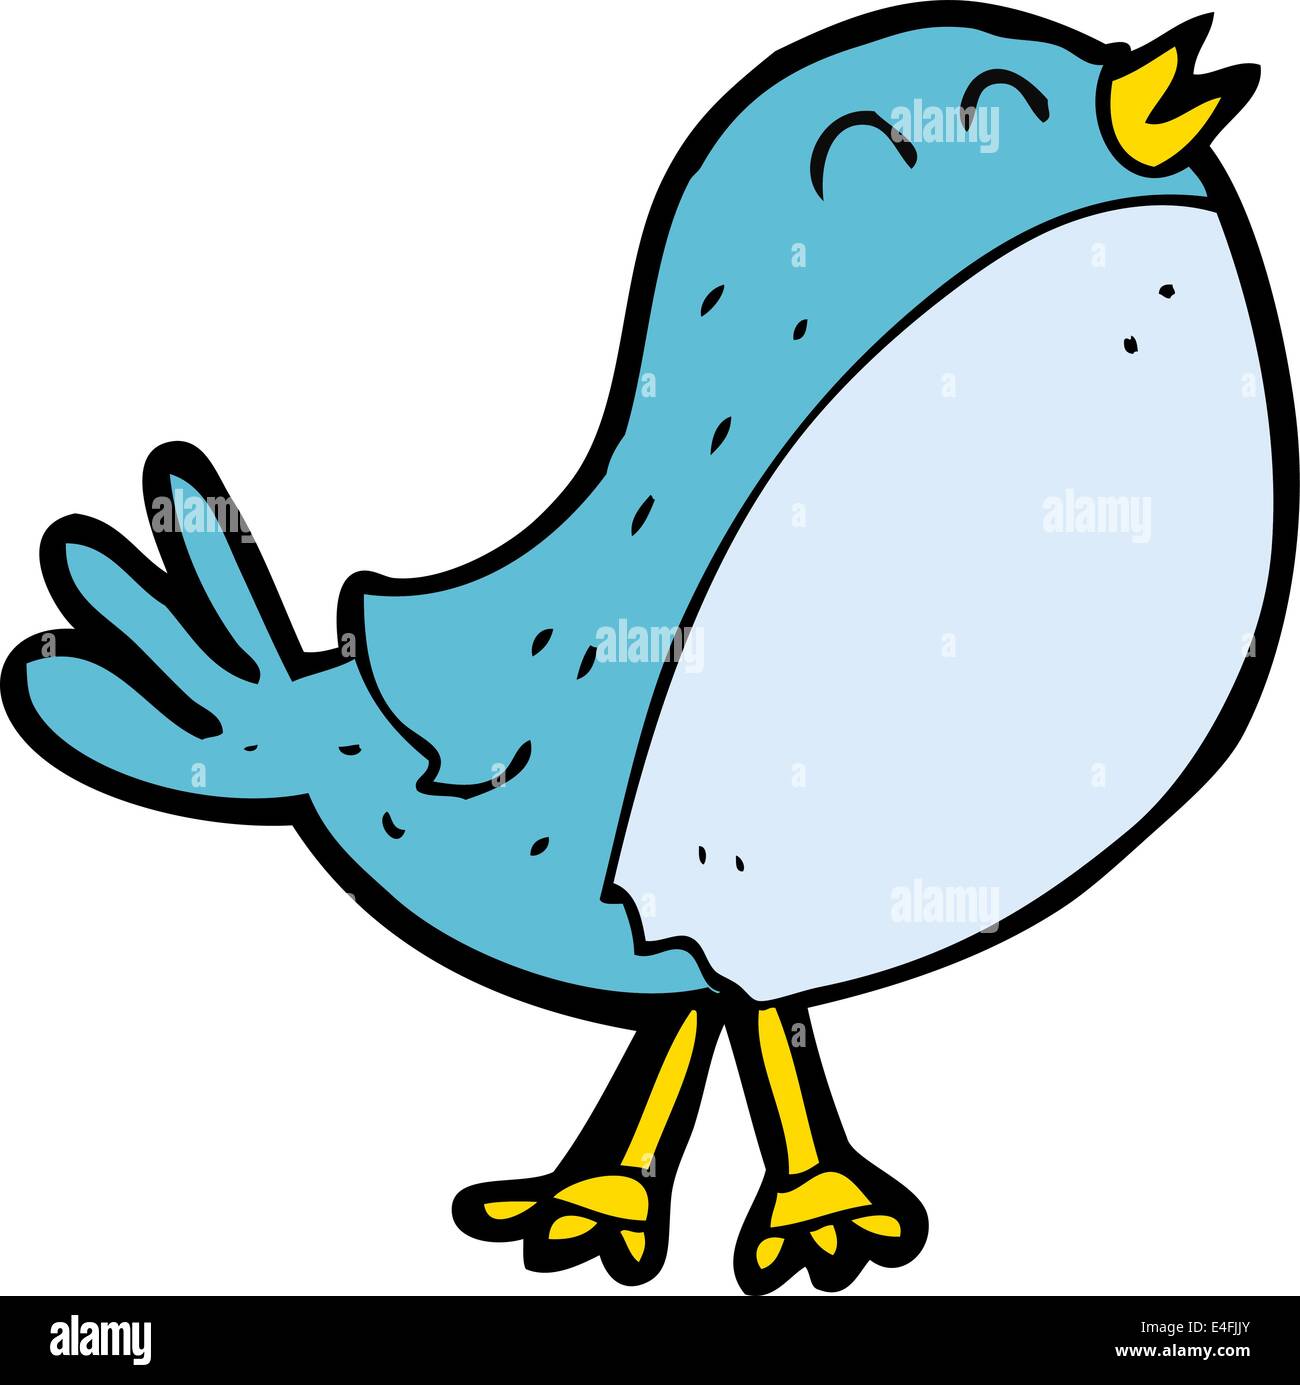 Cartoon Singender Vogel Stock-Vektorgrafik - Alamy